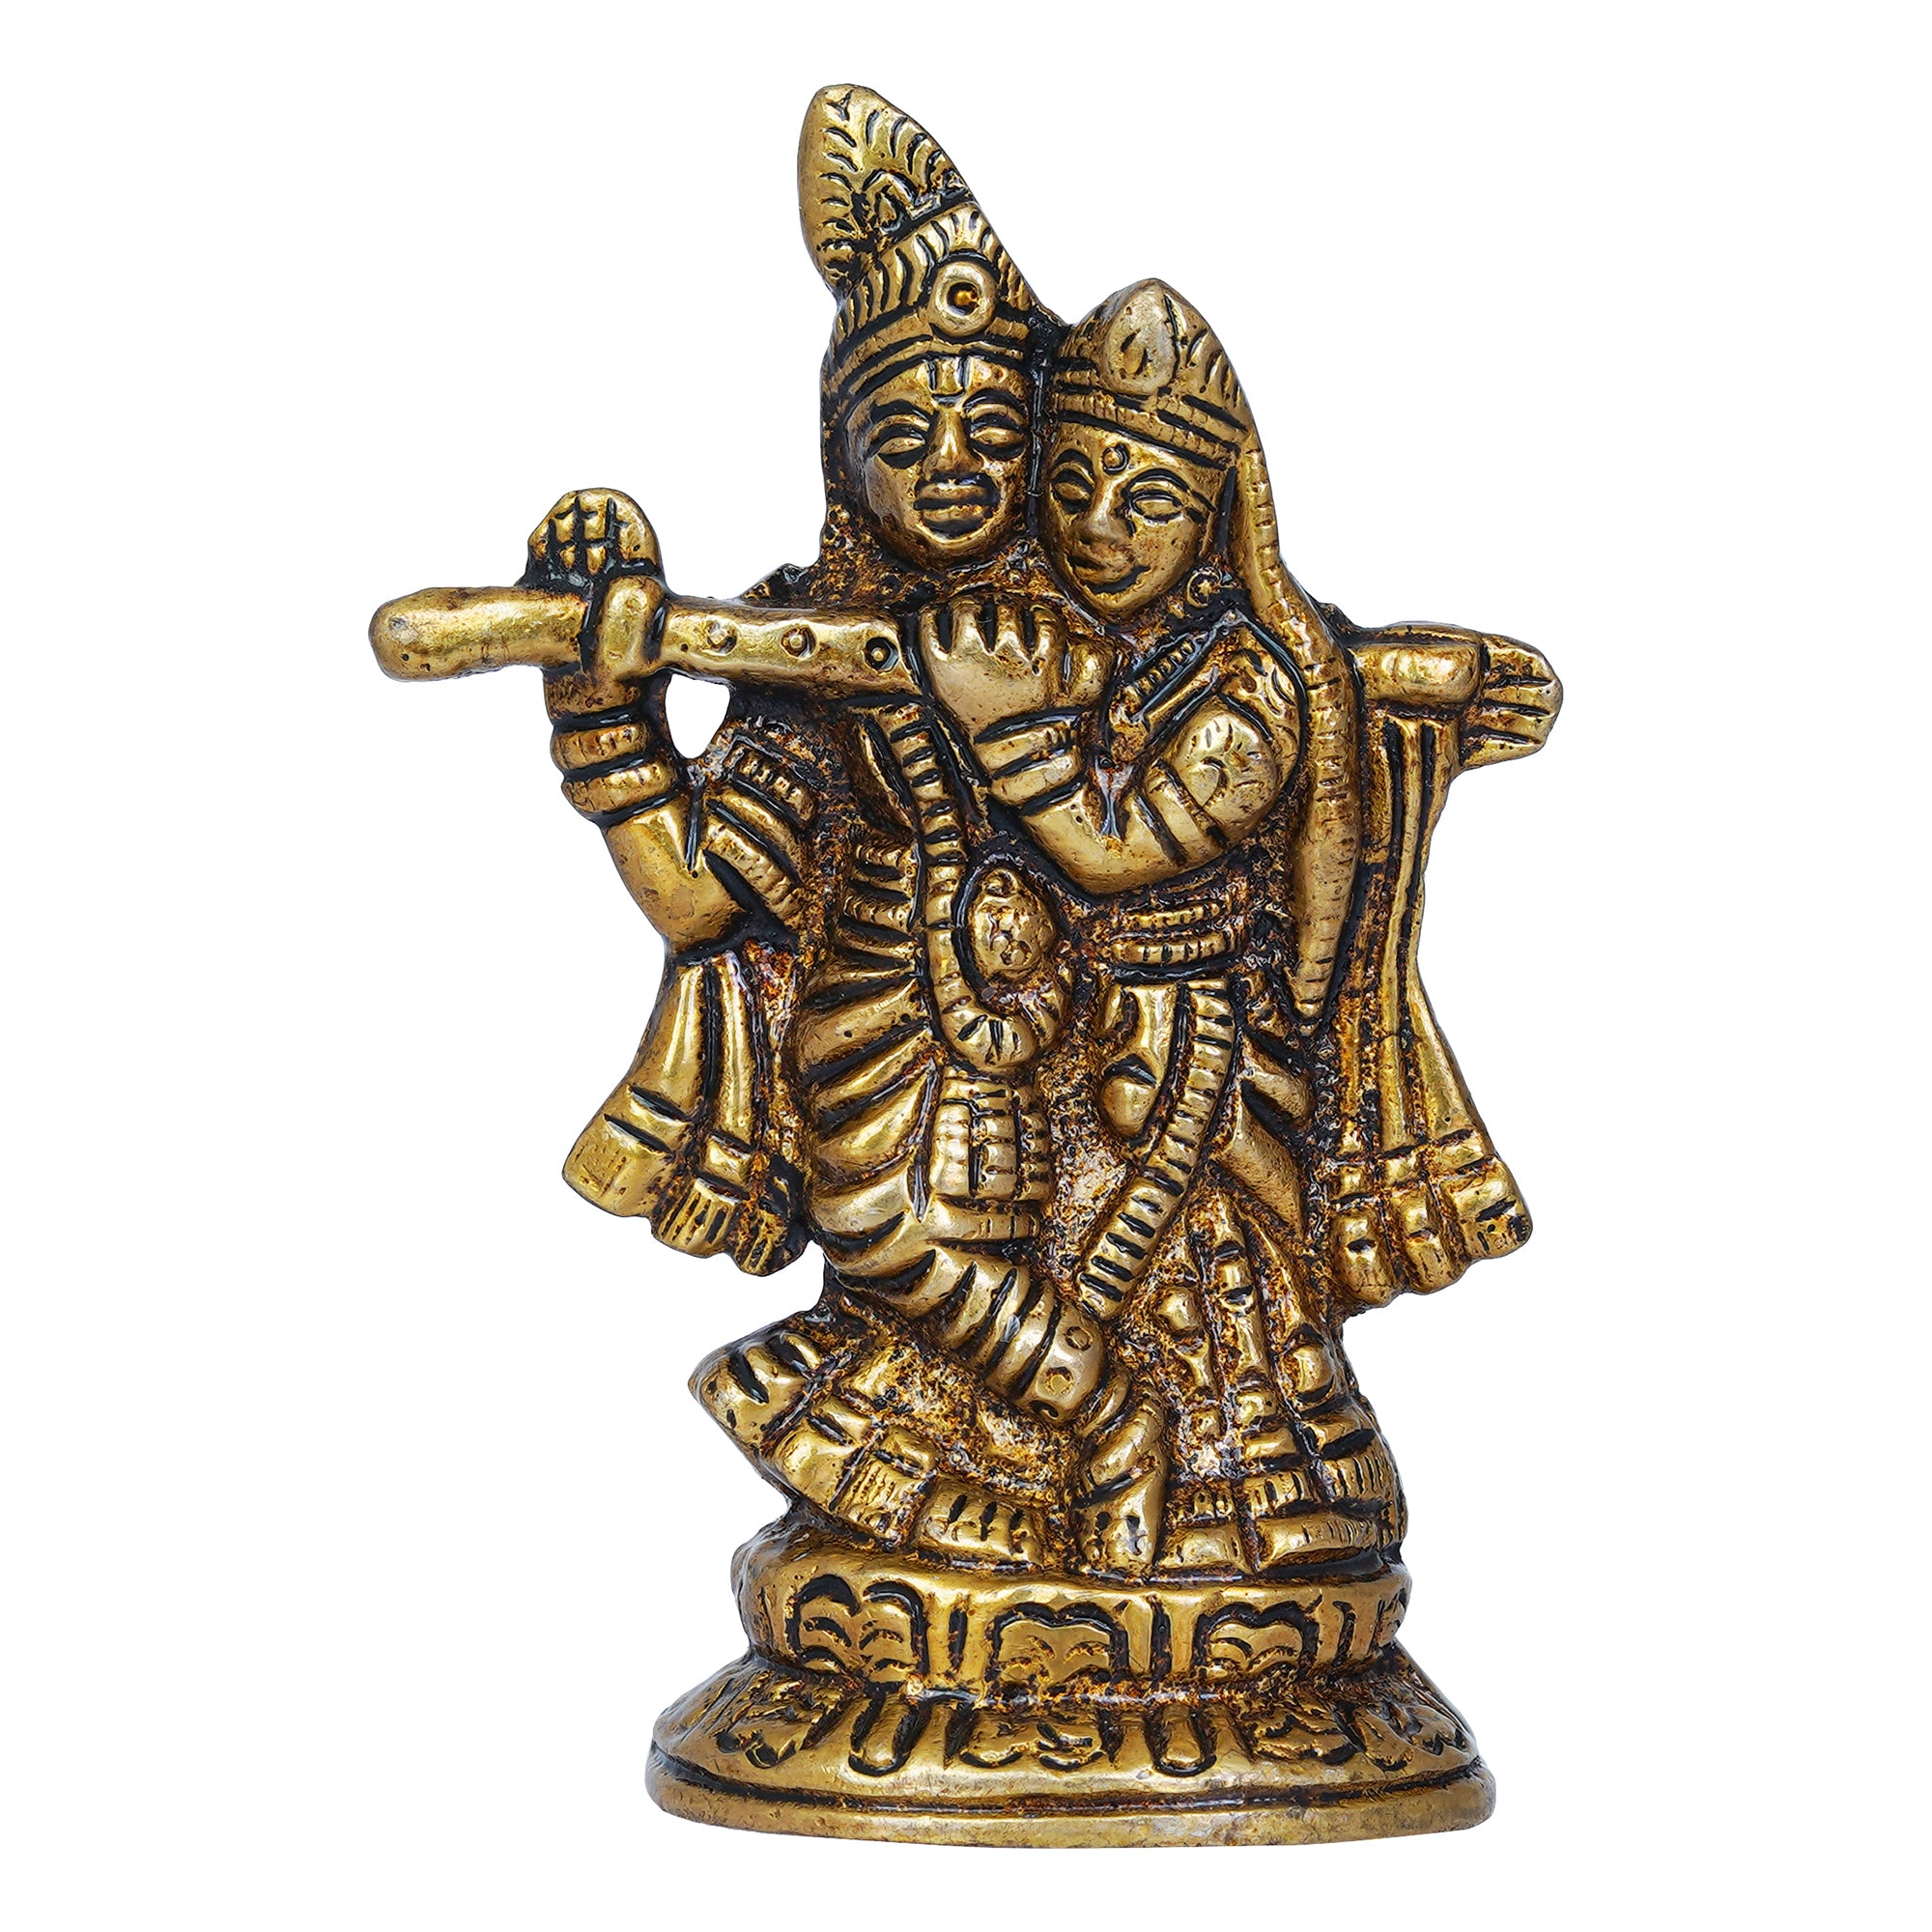 Golden Brass Radha Krishna Murti Idol - God Goddess Statue Decorative Showpiece for Home, Office, Car Dashboard - Gift for Festivals like Janmashtami, Radha Ashtami, and Diwali 2